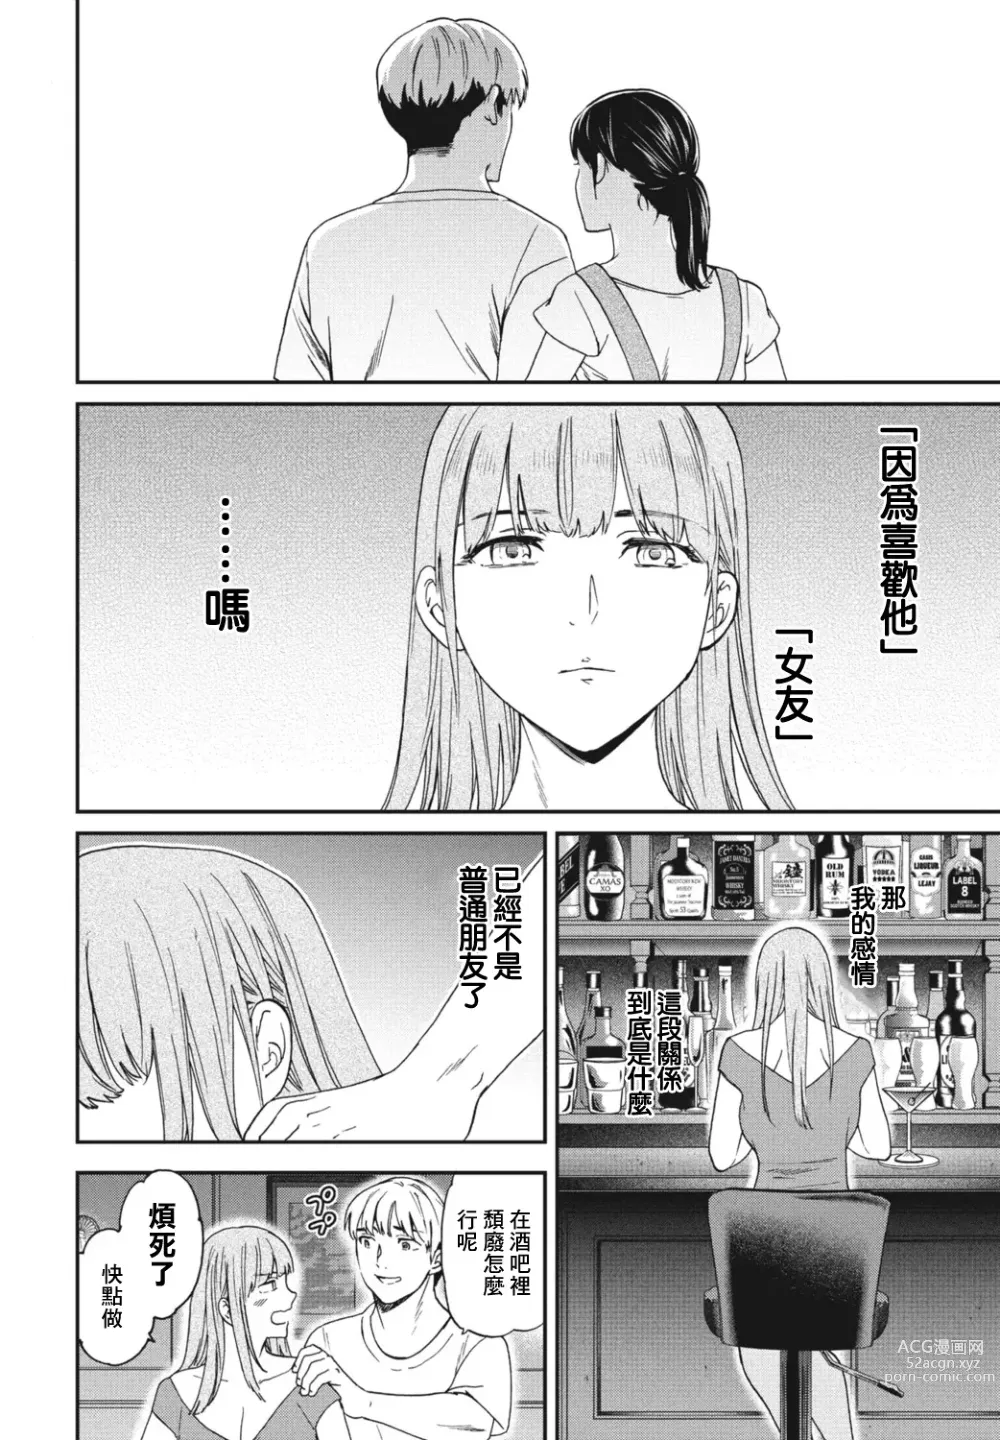 Page 24 of manga Lose